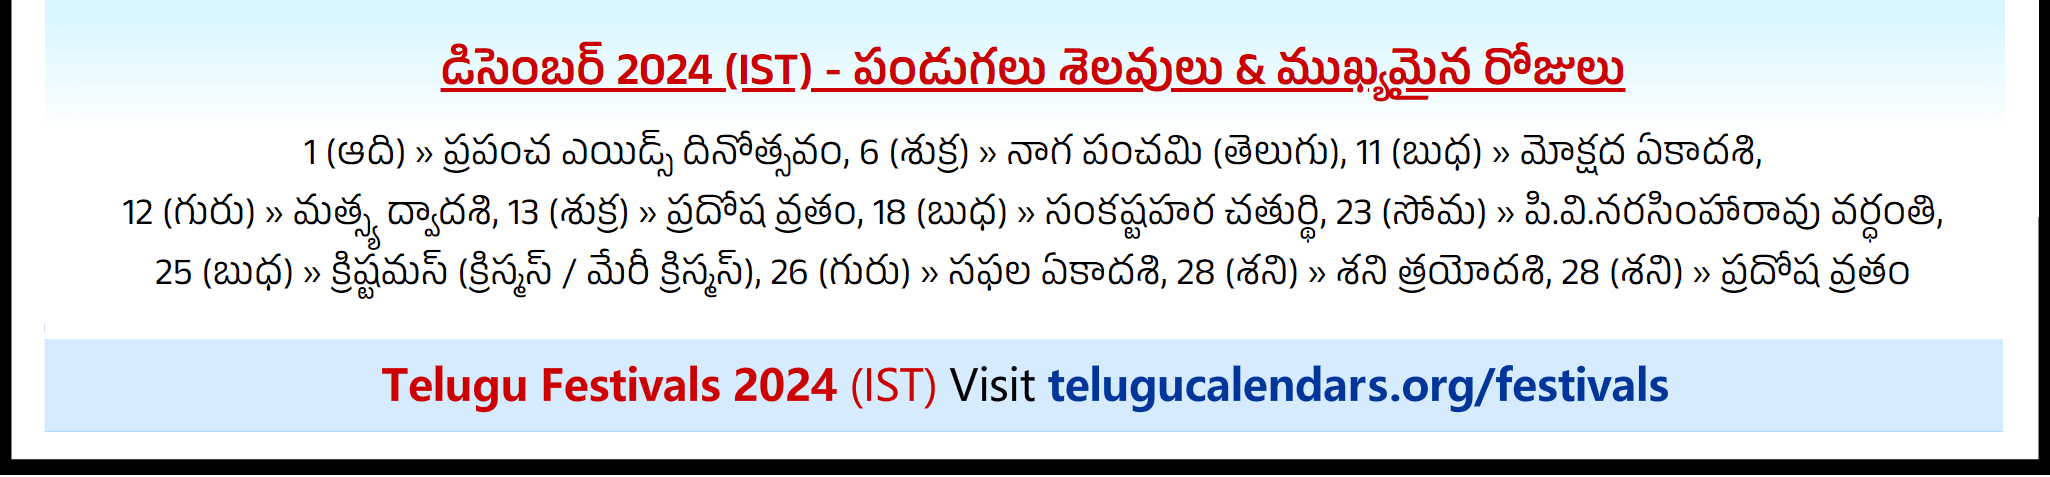 Telugu Festivals 2024 December Chicago